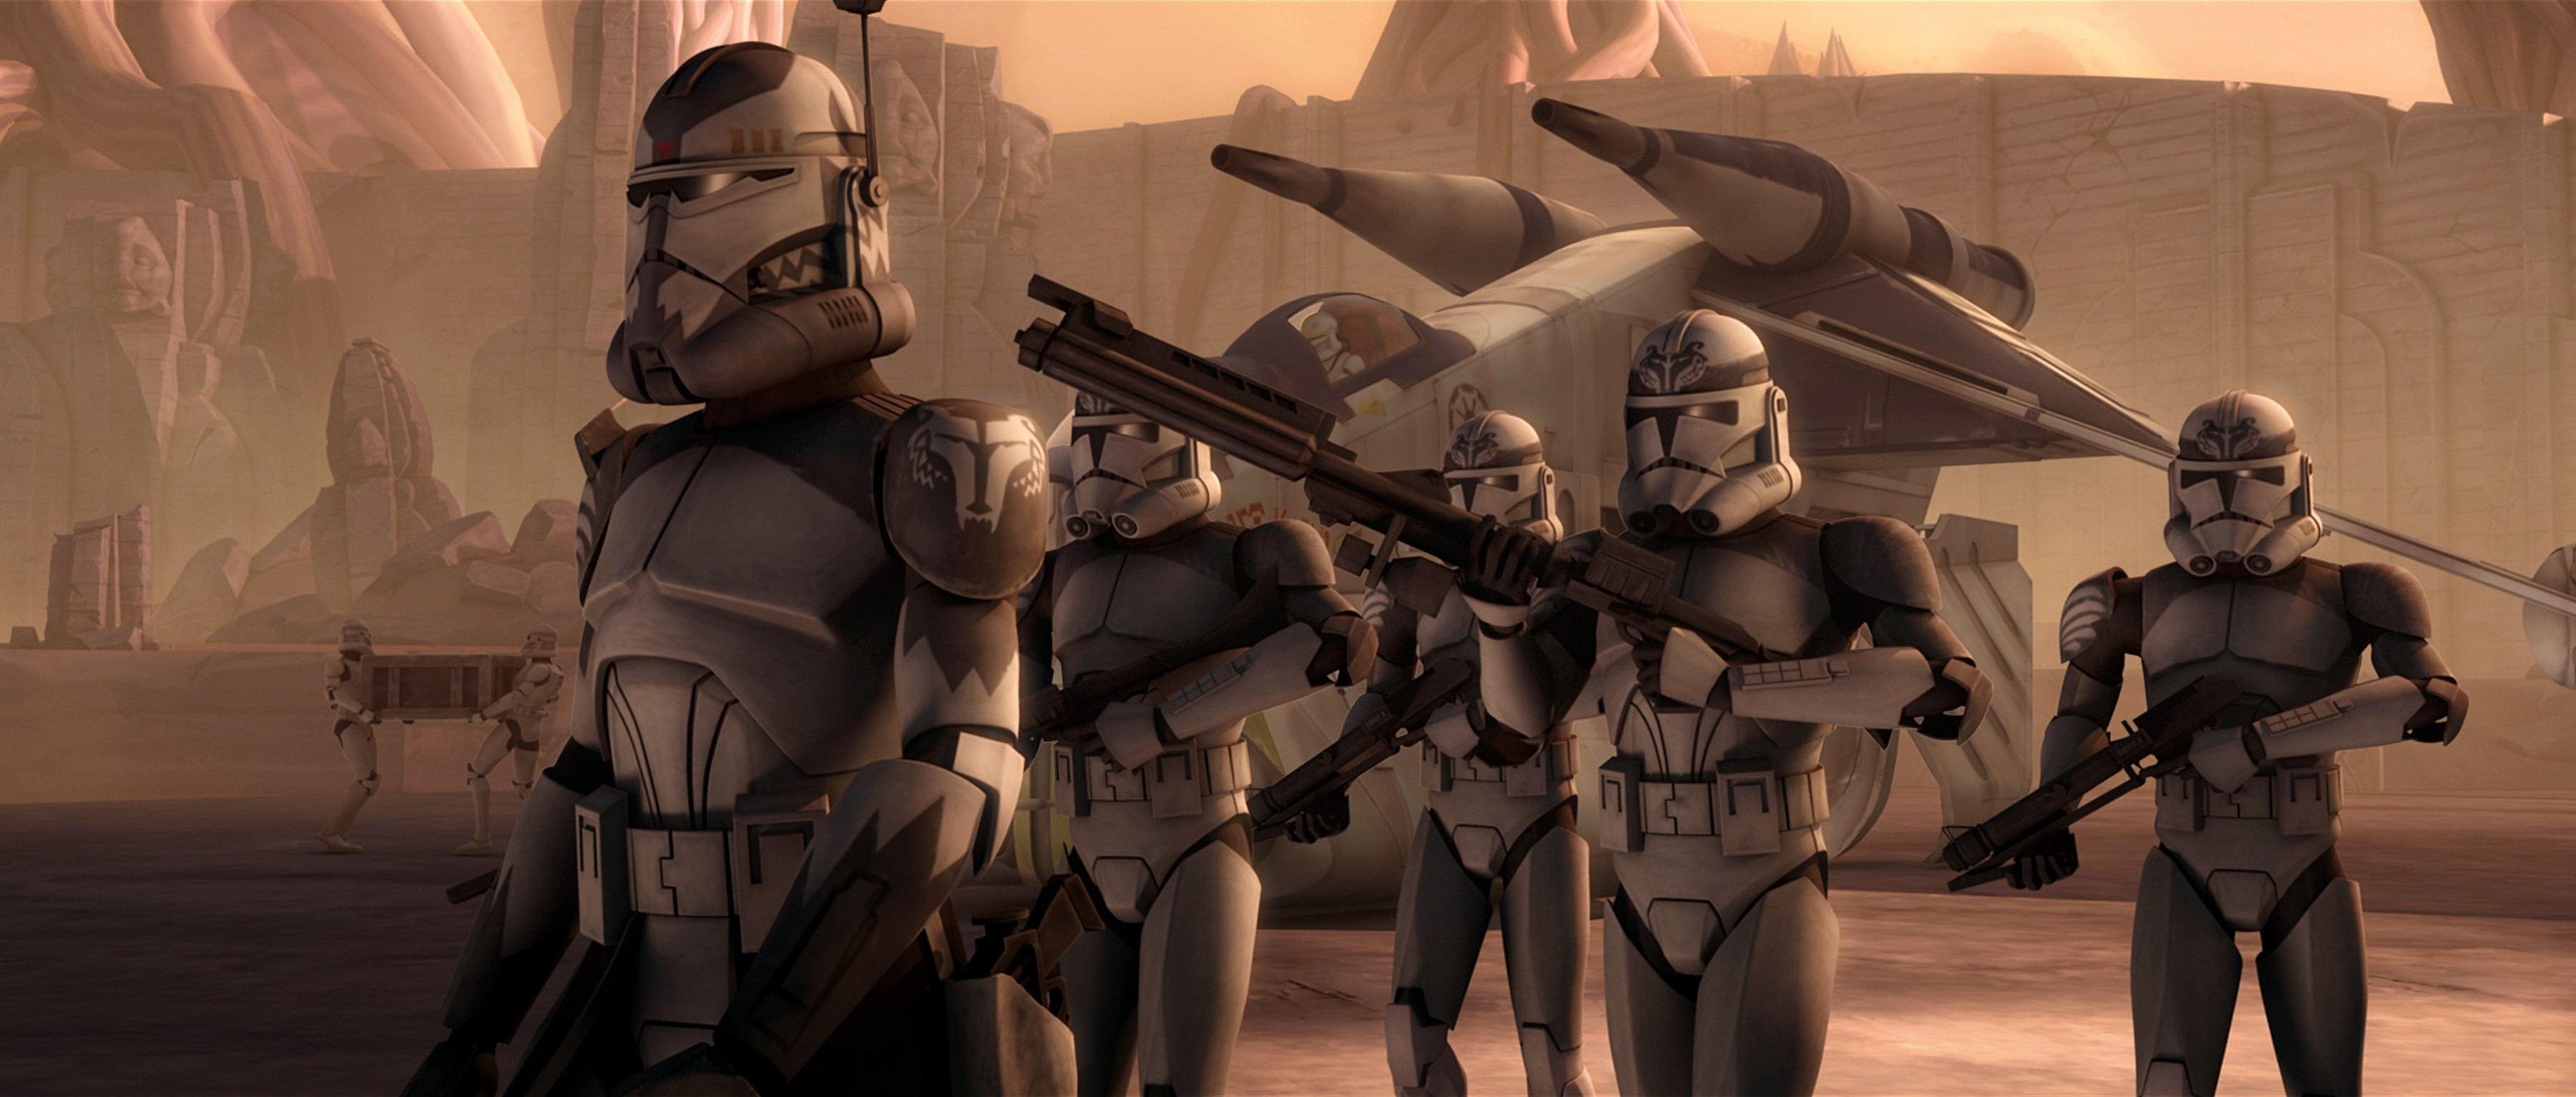 Star Wars, Clone Trooper Wallpaper